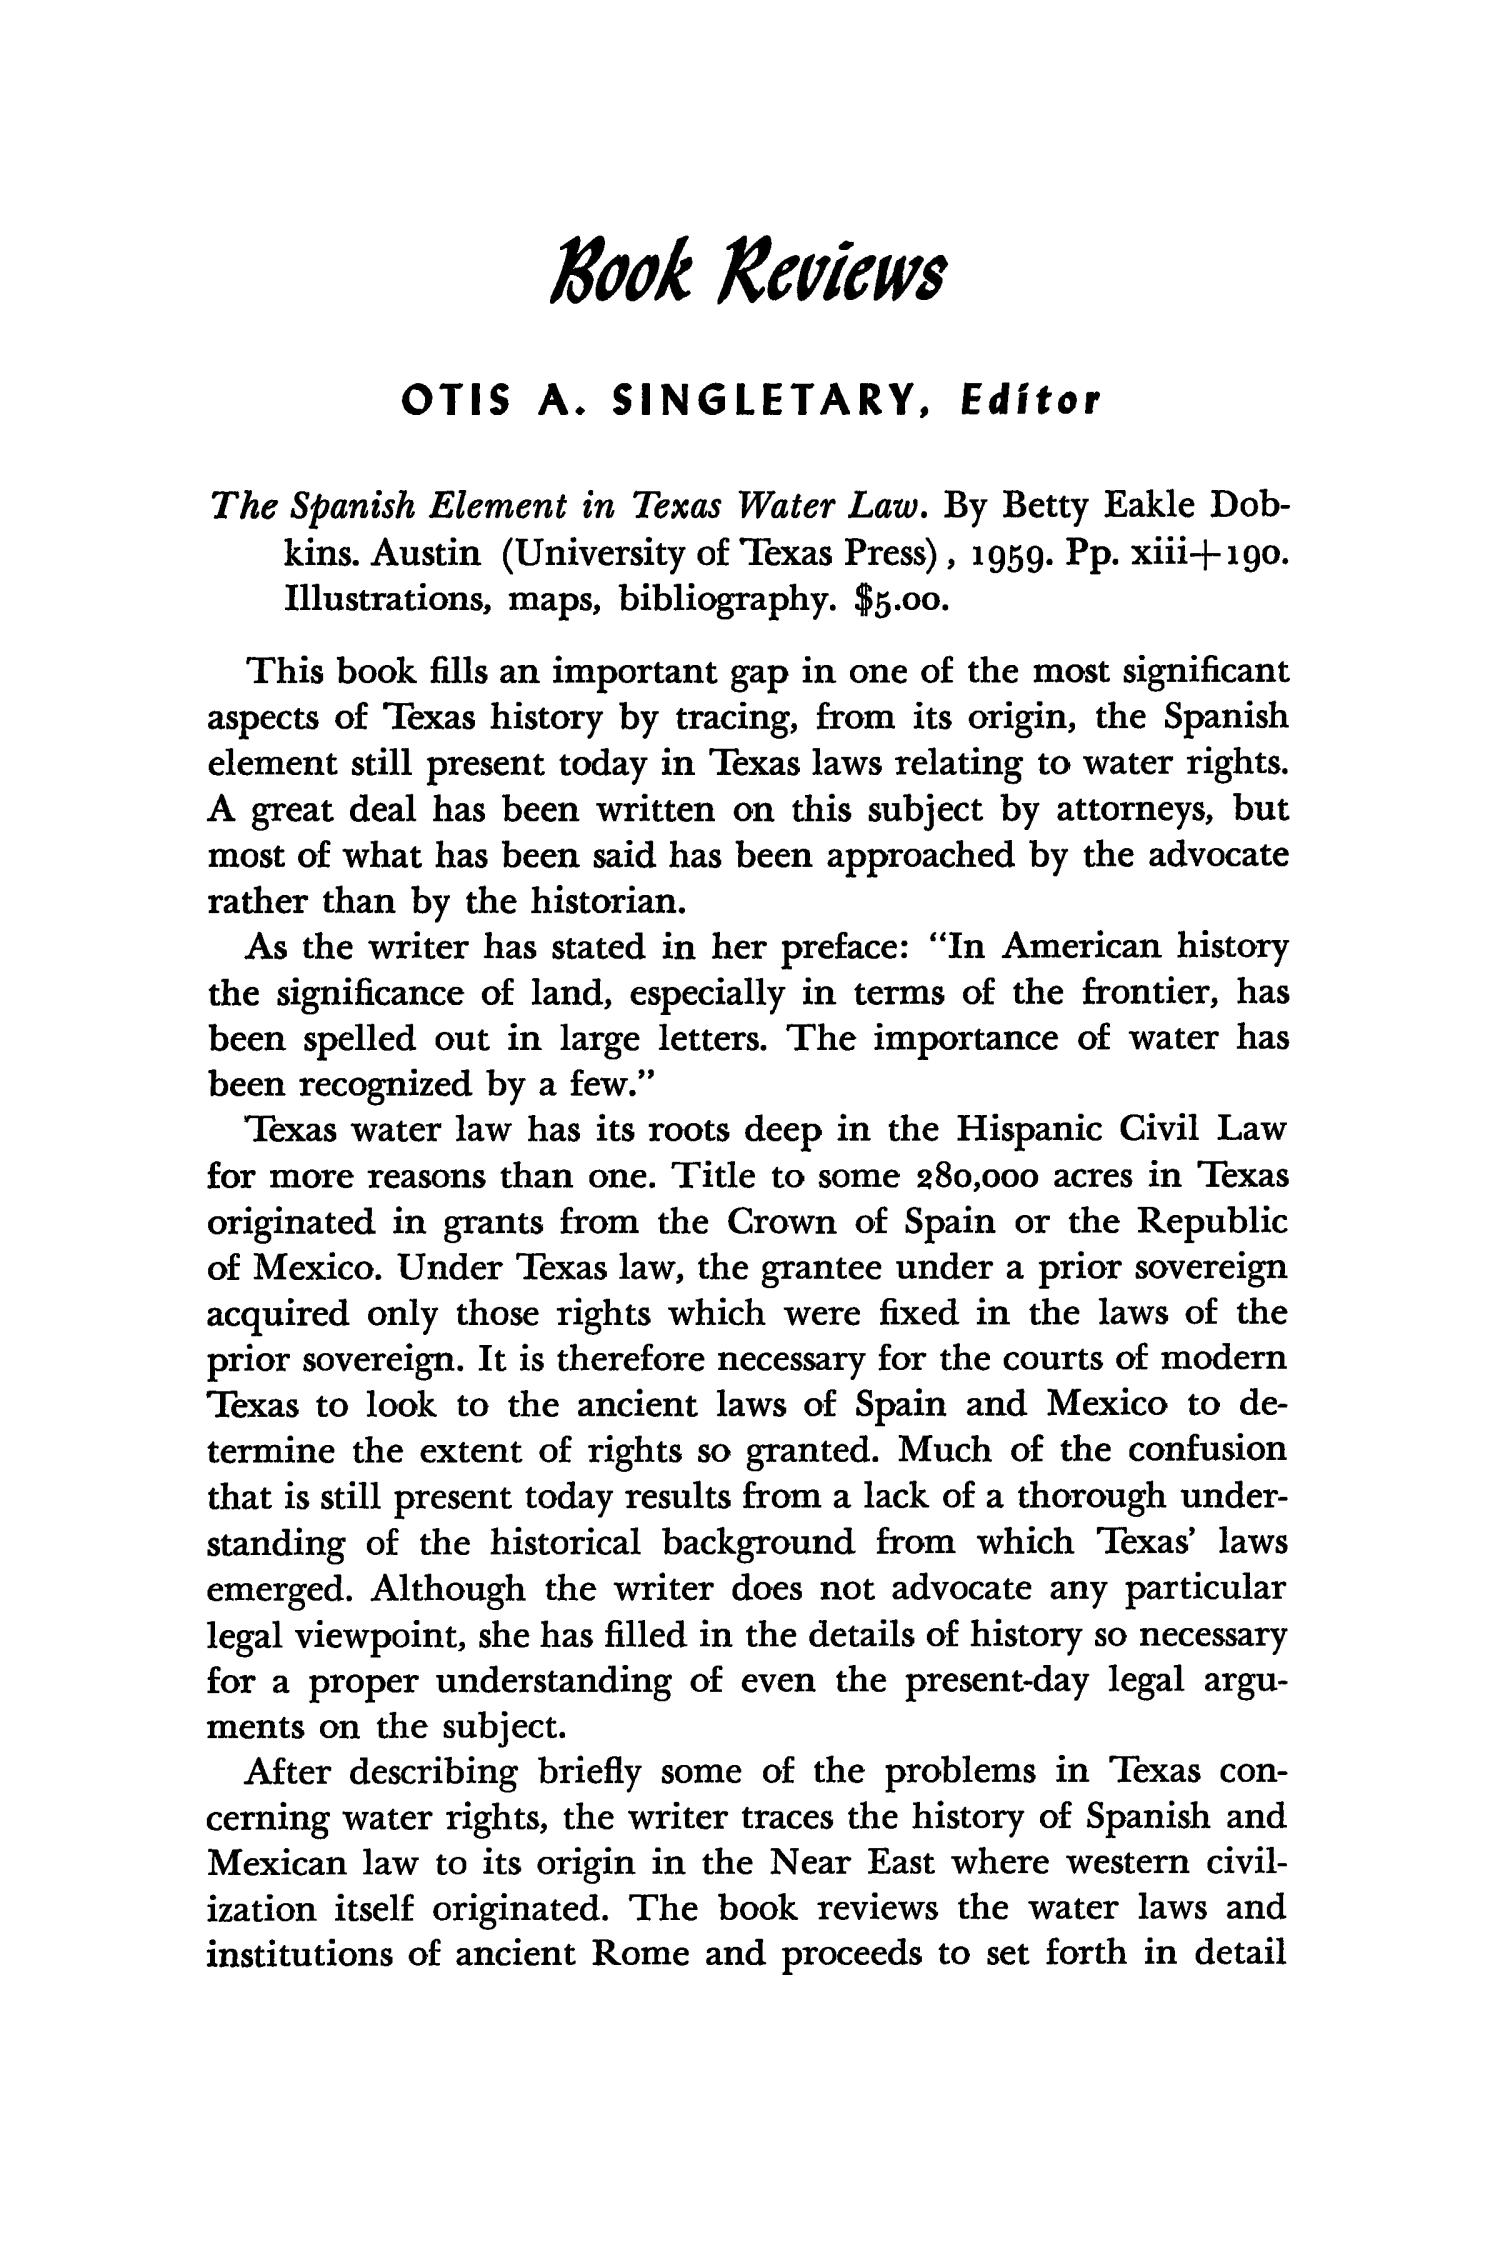 The Southwestern Historical Quarterly, Volume 63, July 1959 - April, 1960
                                                
                                                    627
                                                